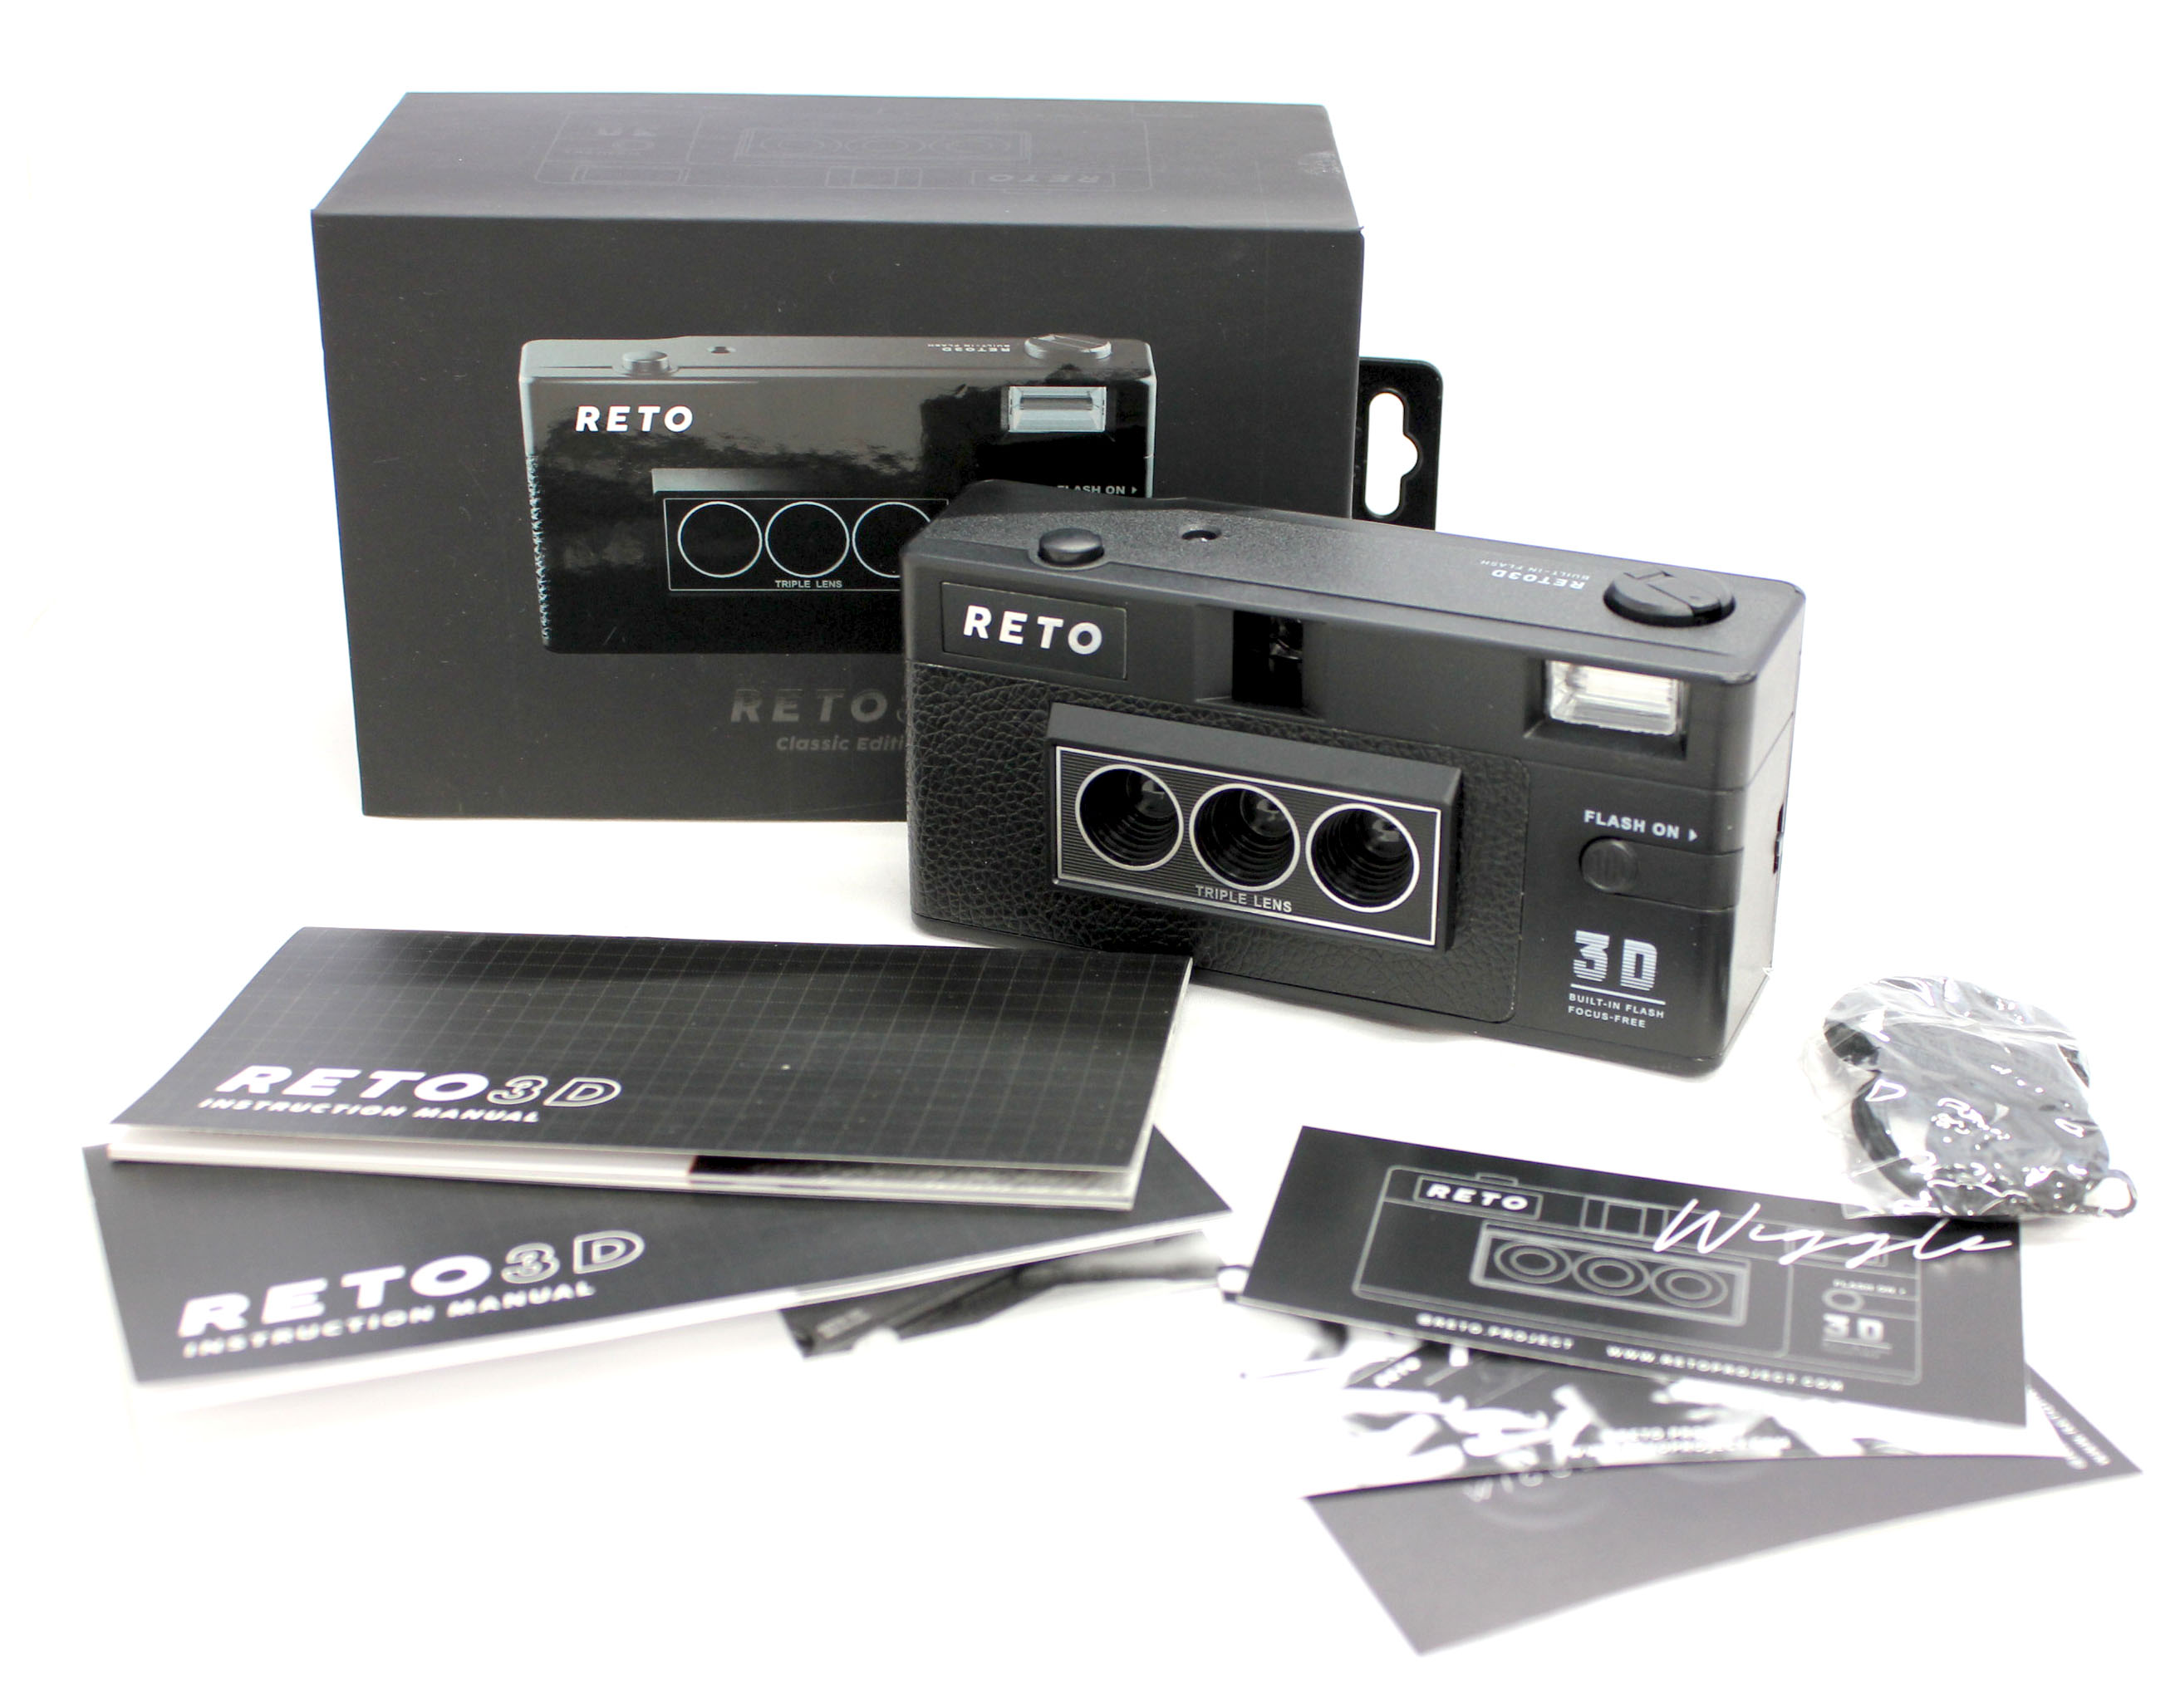 Reto 3D 35mm Film Camera Triple Lens similar Nishika N8000 from Japan